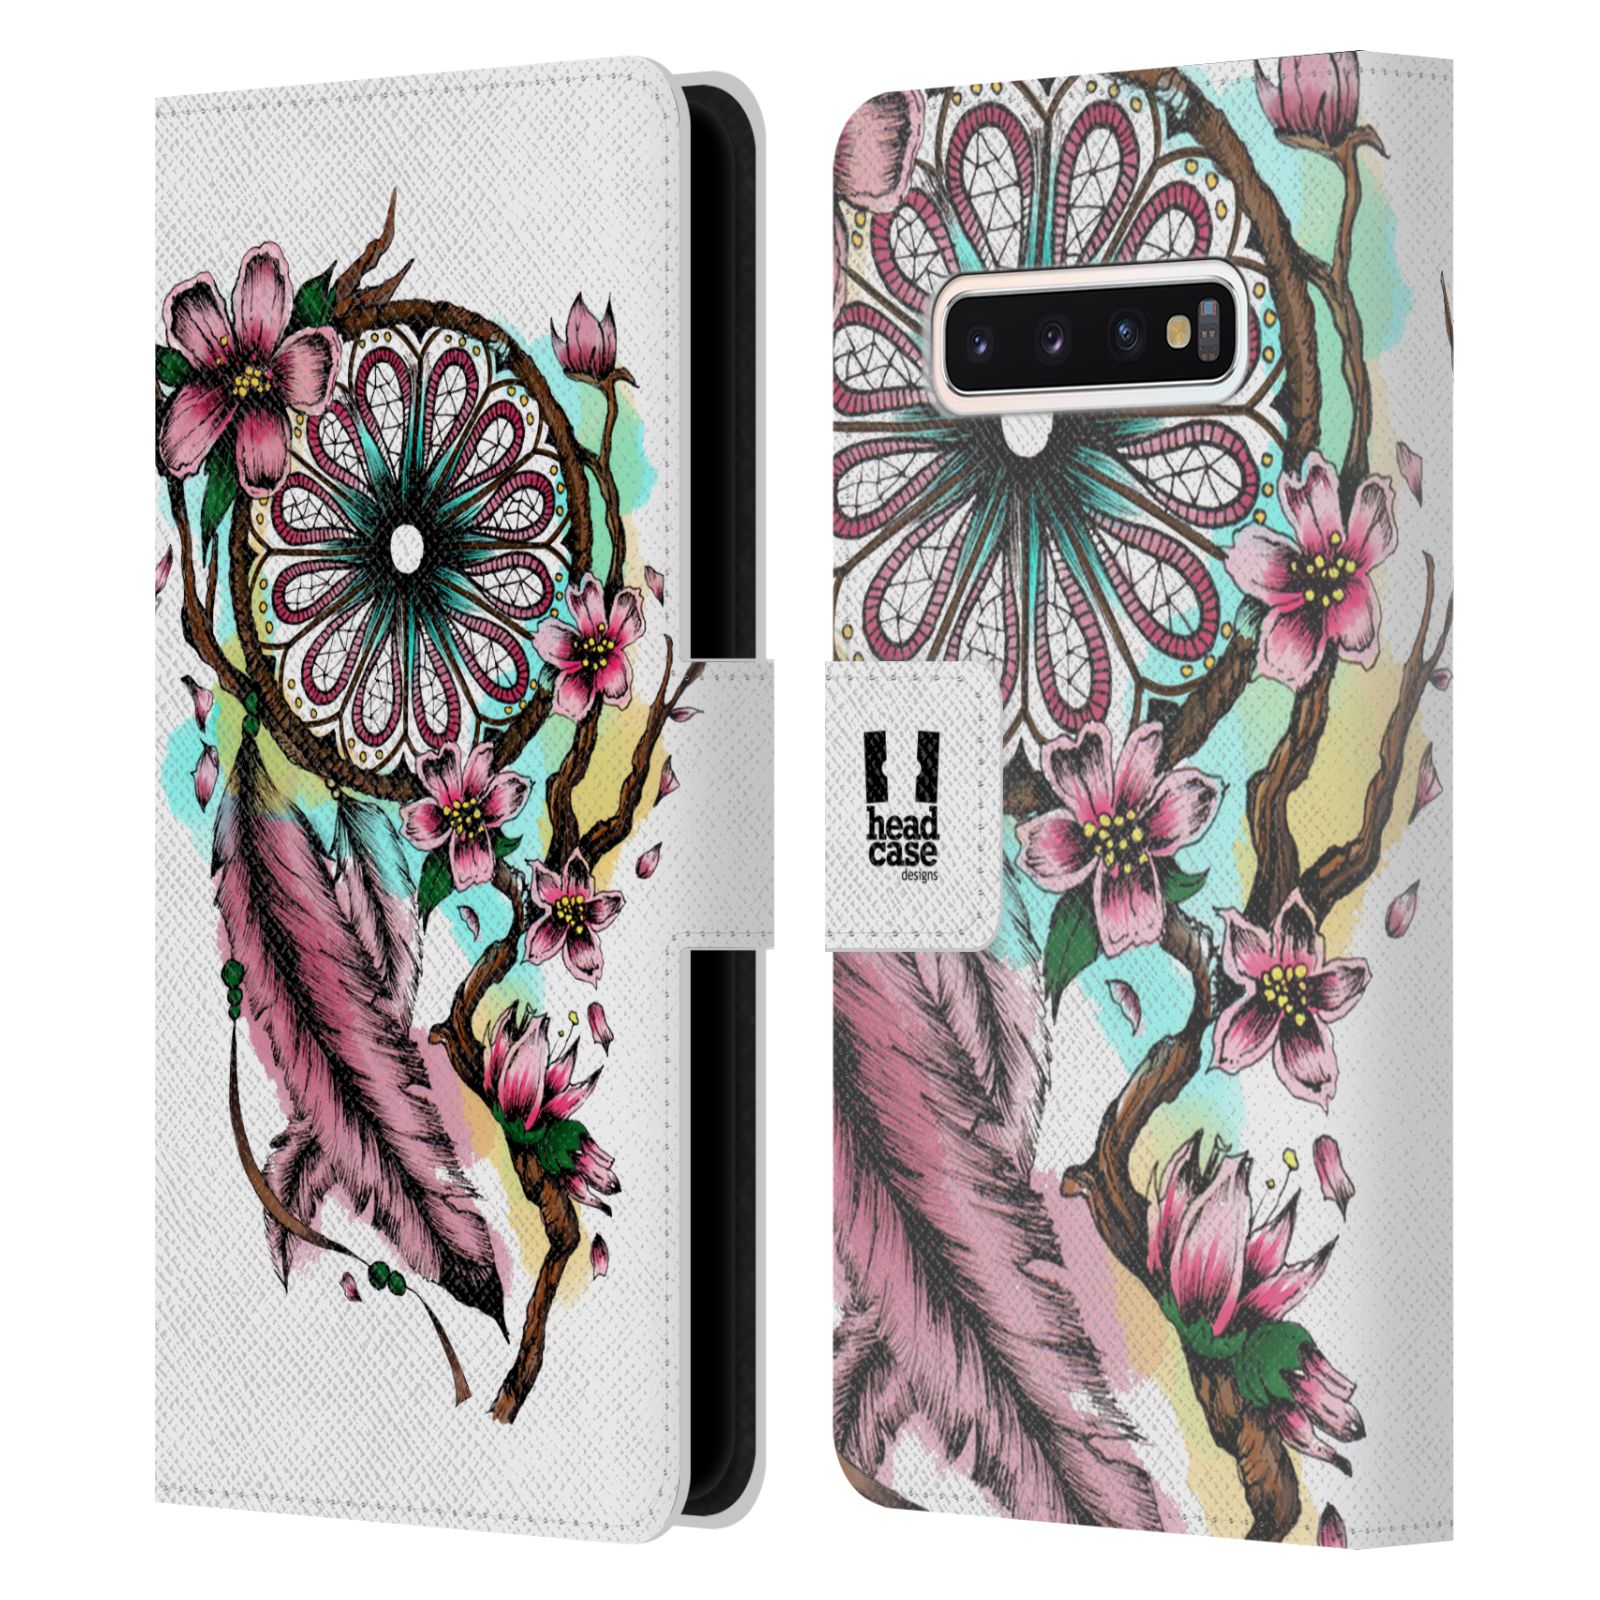 Pouzdro pro mobil Samsung Galaxy S10 - Květinový vzor lapač snů